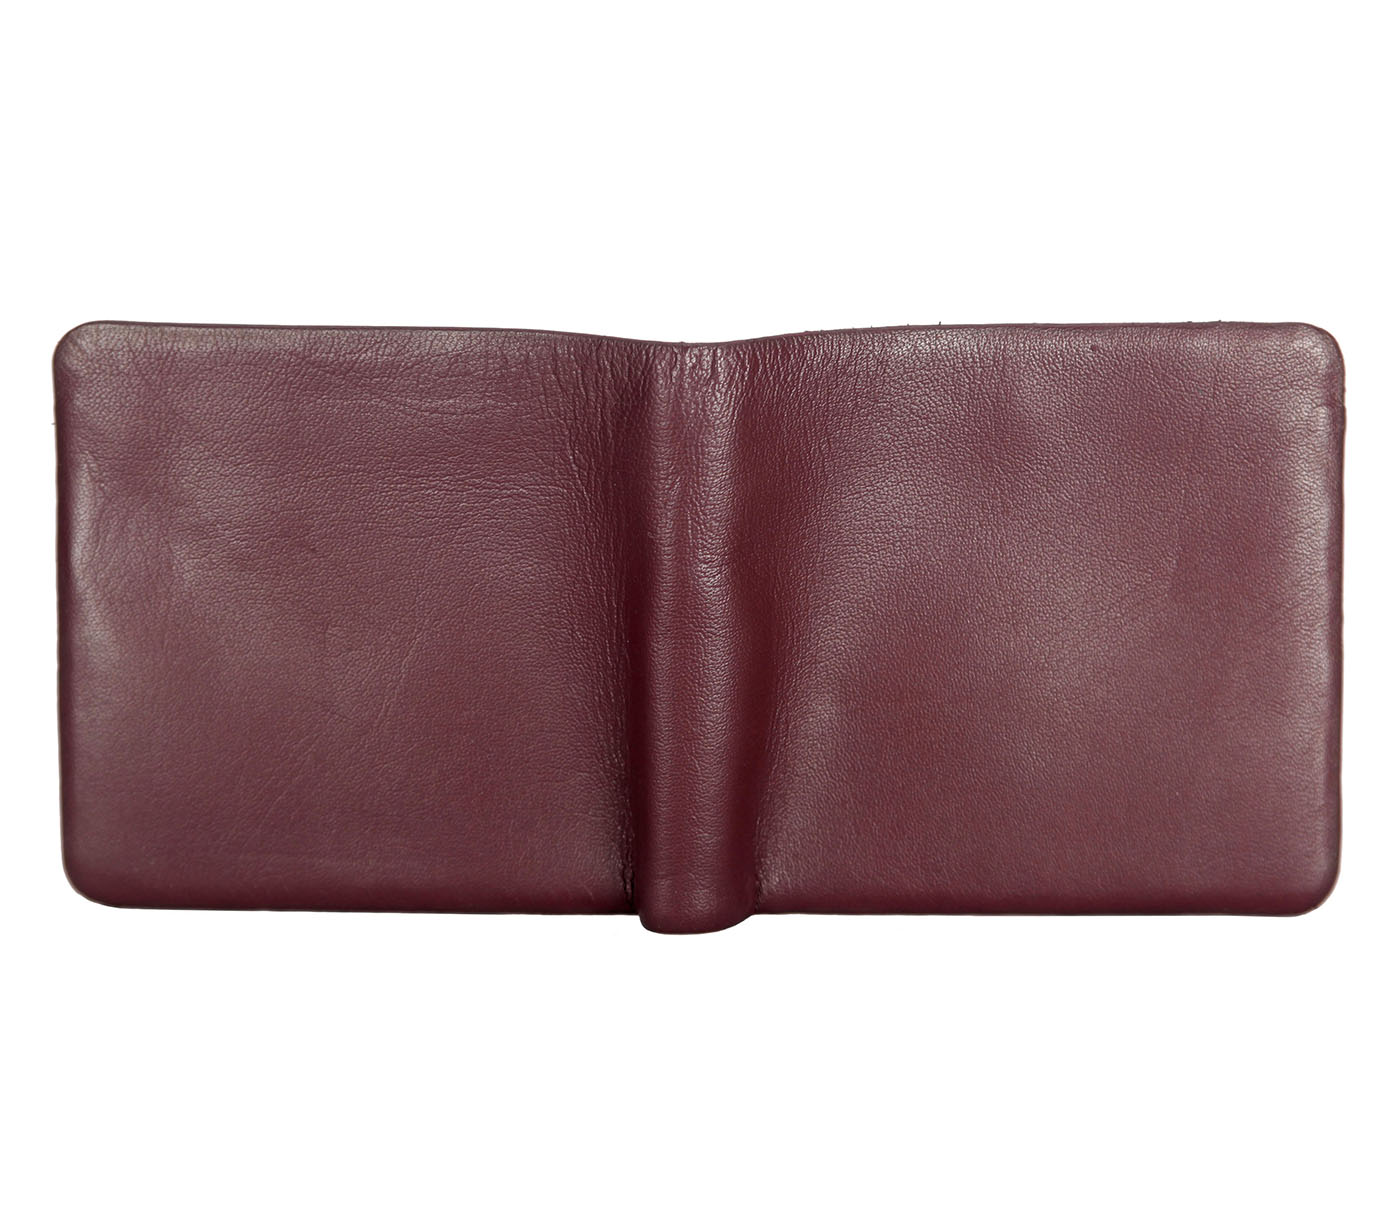 VW18-Diego-Men's bifold sleek wallet in Genuine Leather - Wine